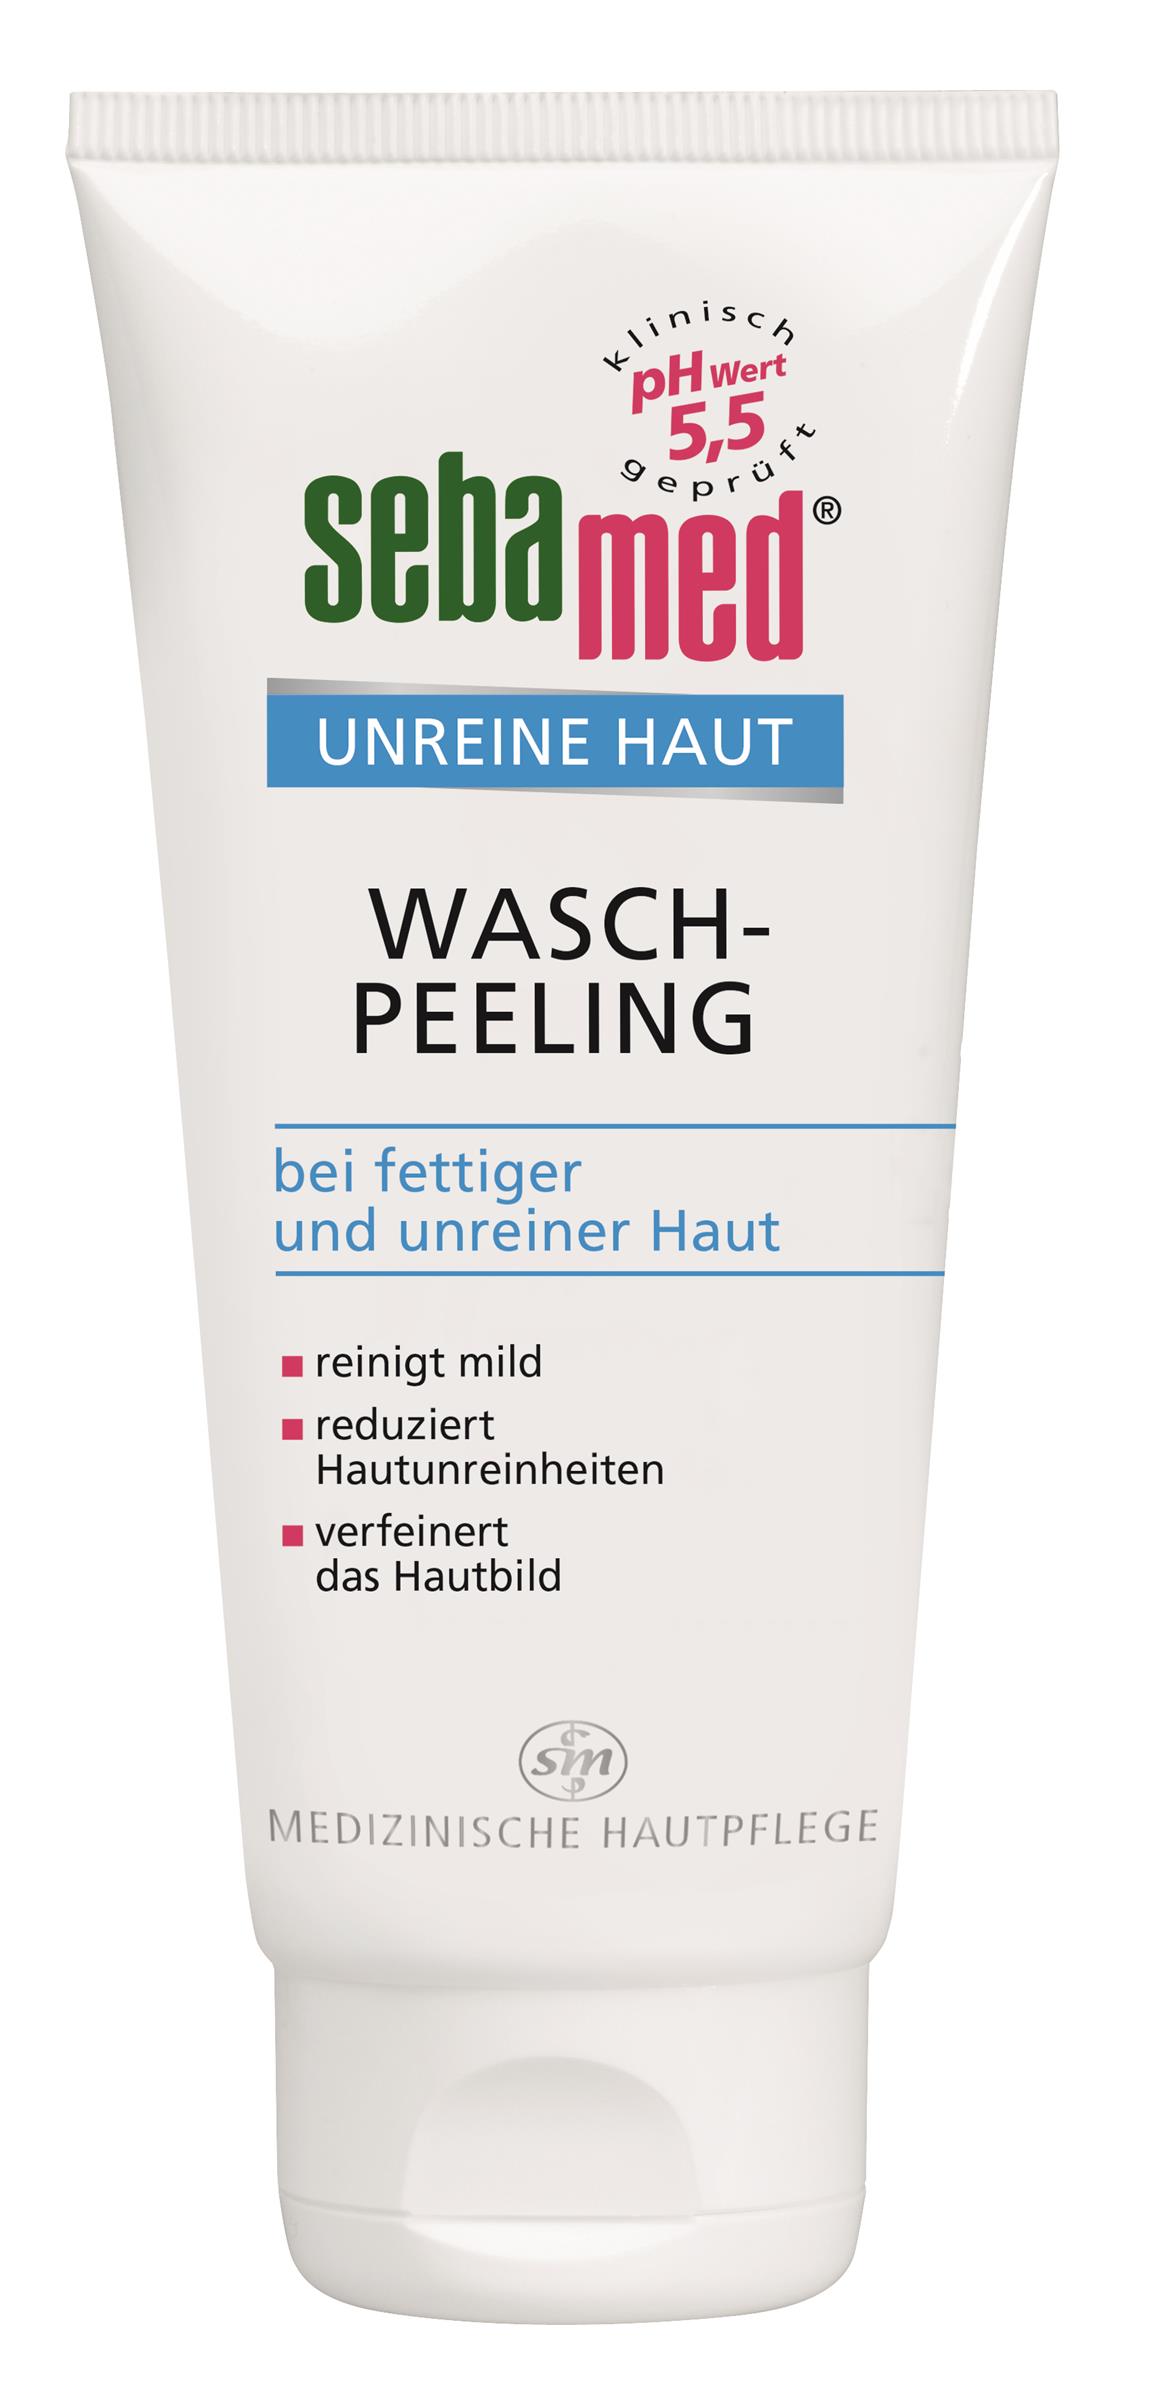 sebamed Unreine Haut Wasch-Peeling